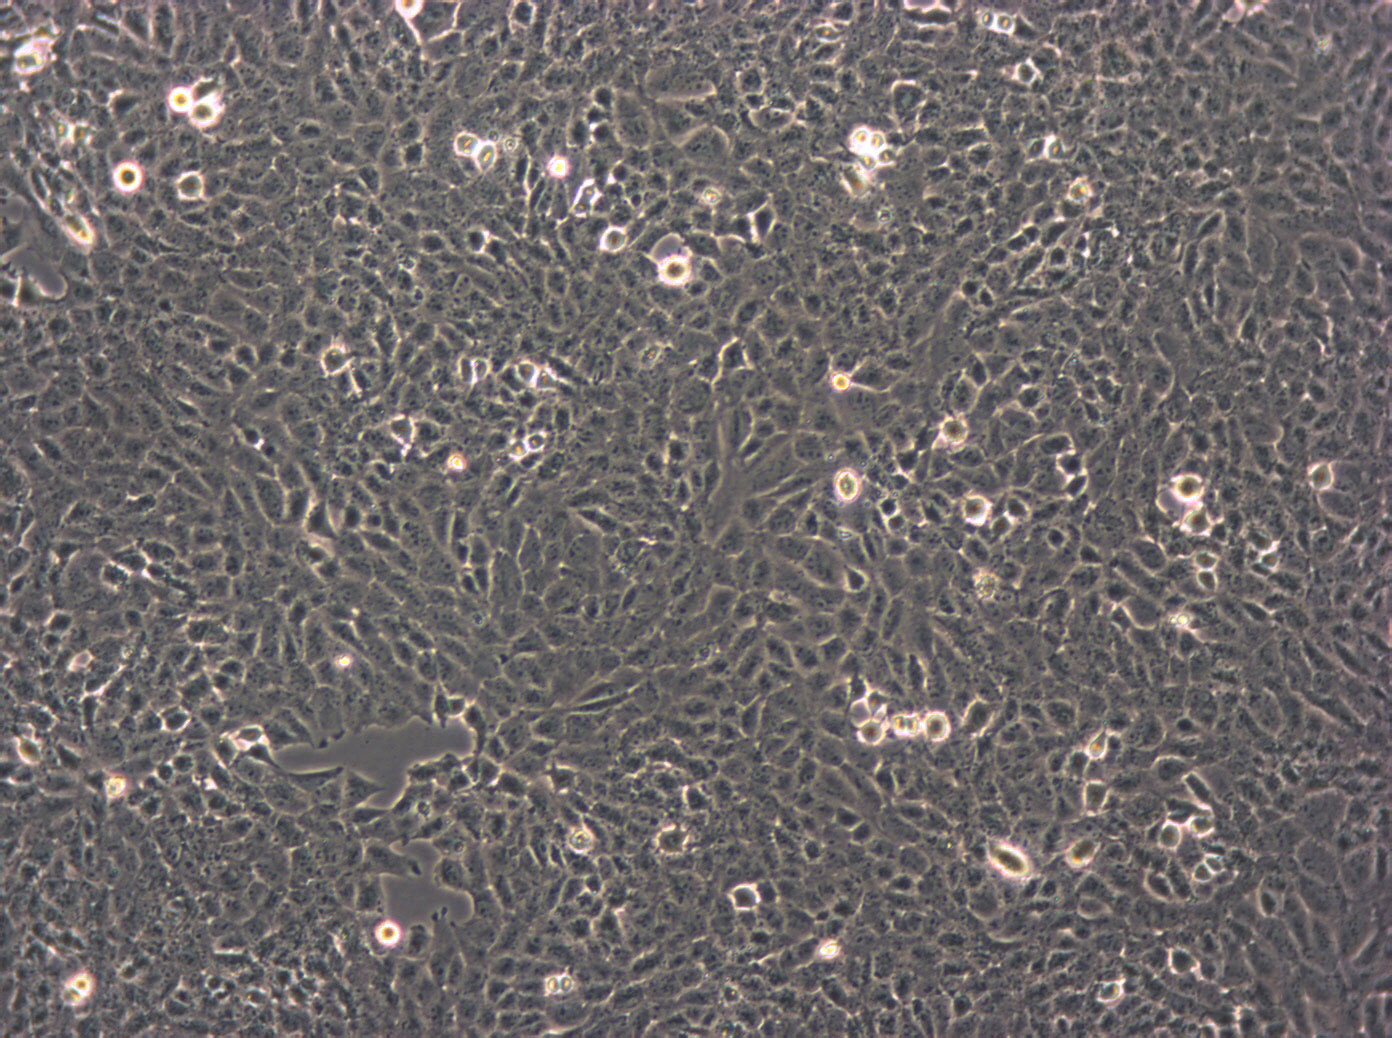 TM3 cell line小鼠睾丸间质细胞系